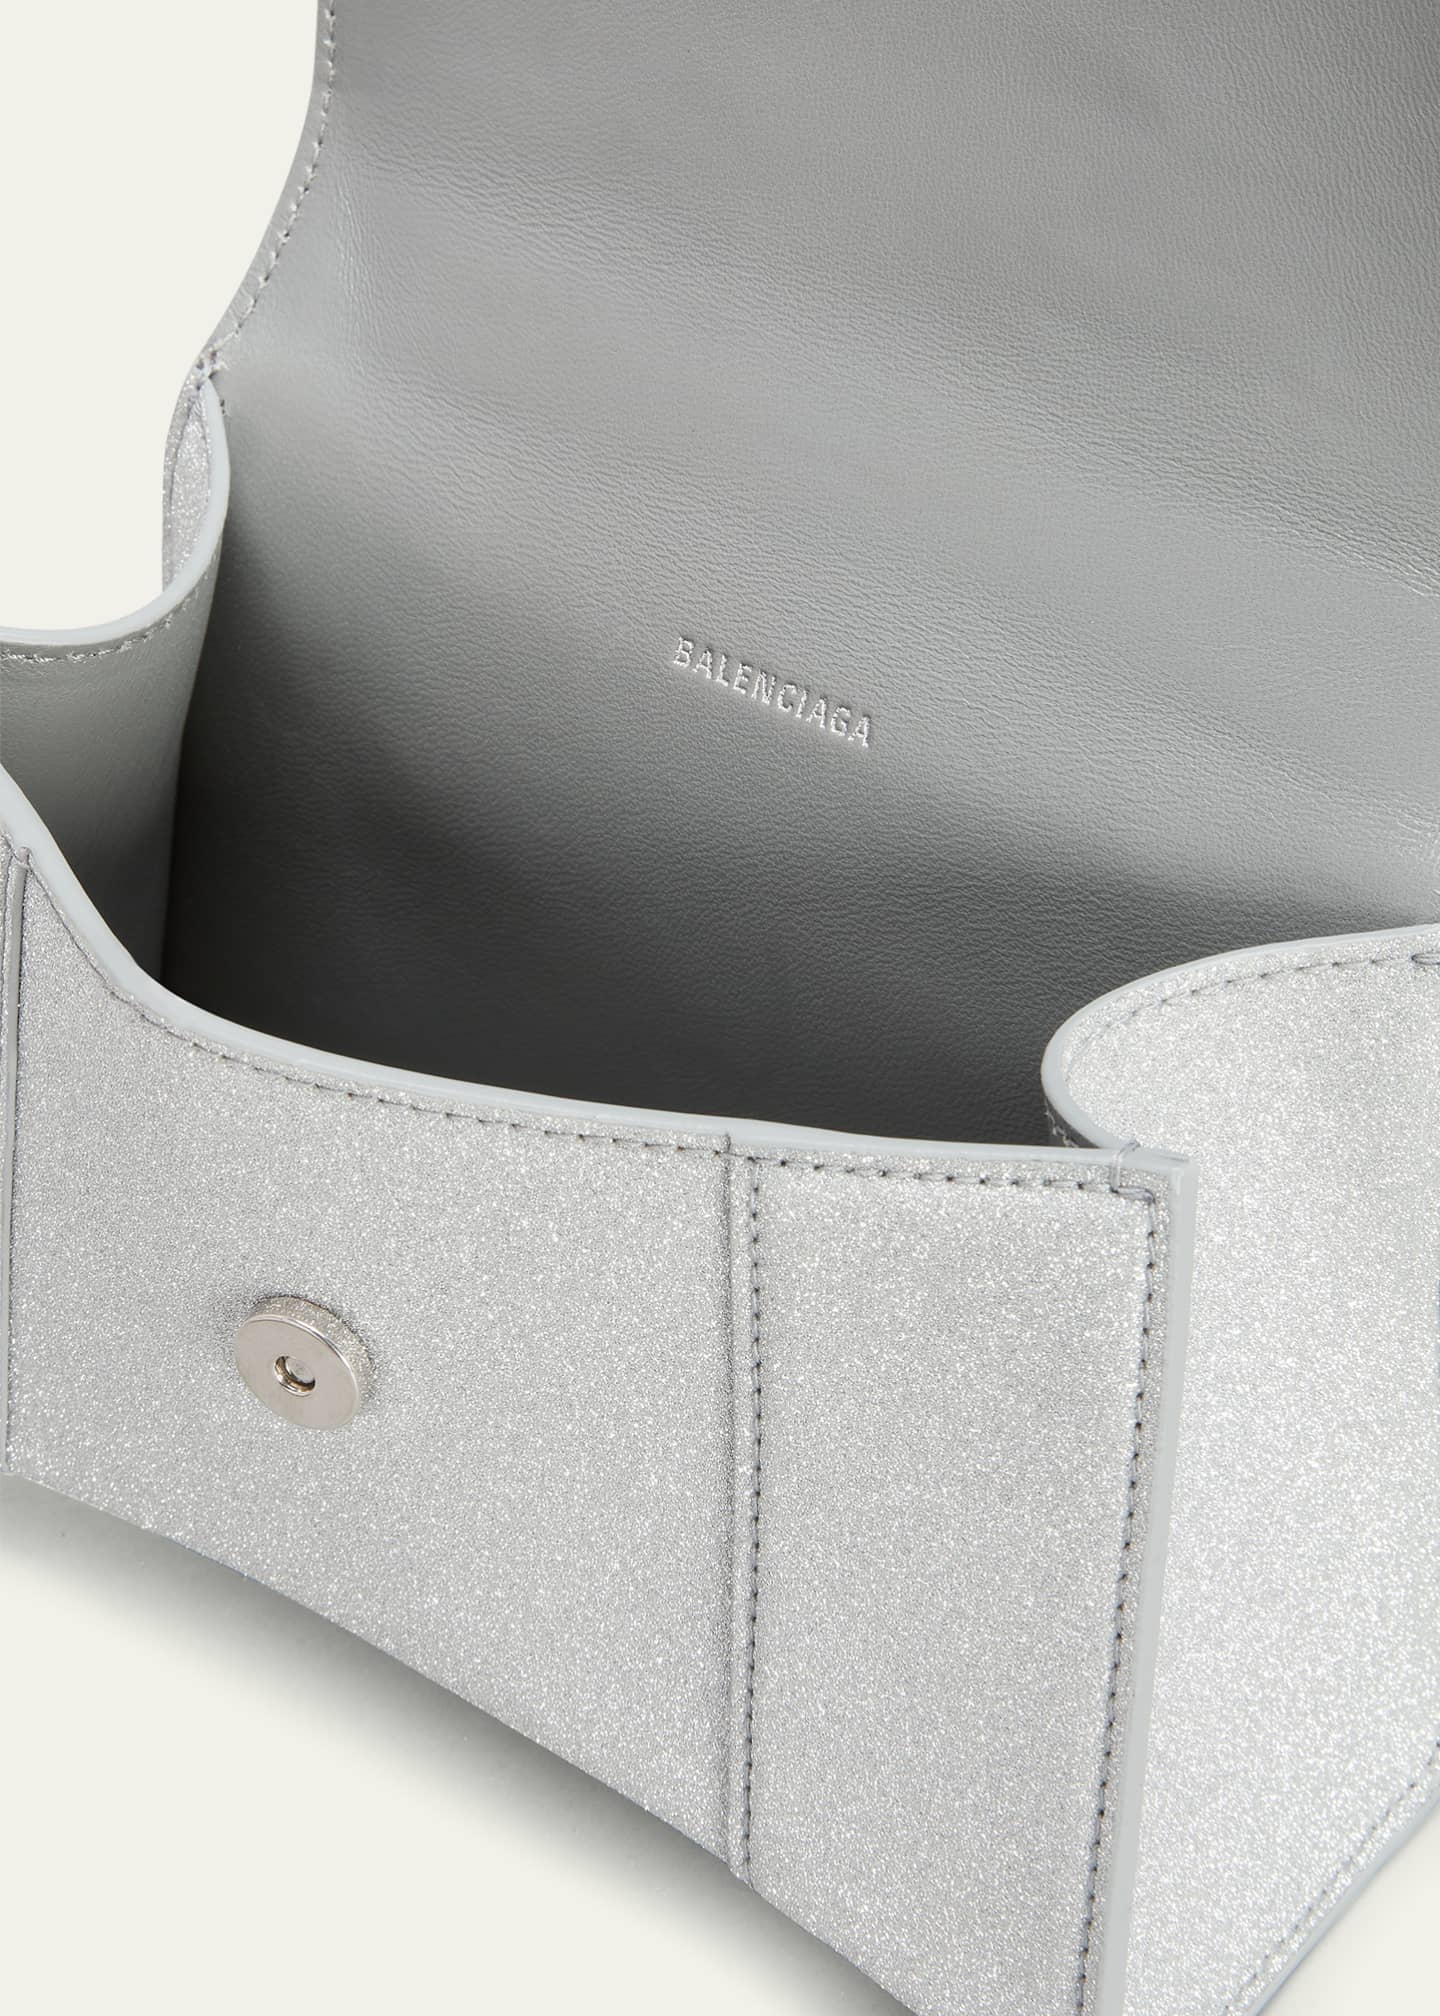 Balenciaga: Silver Mini Glitter Hourglass Bag